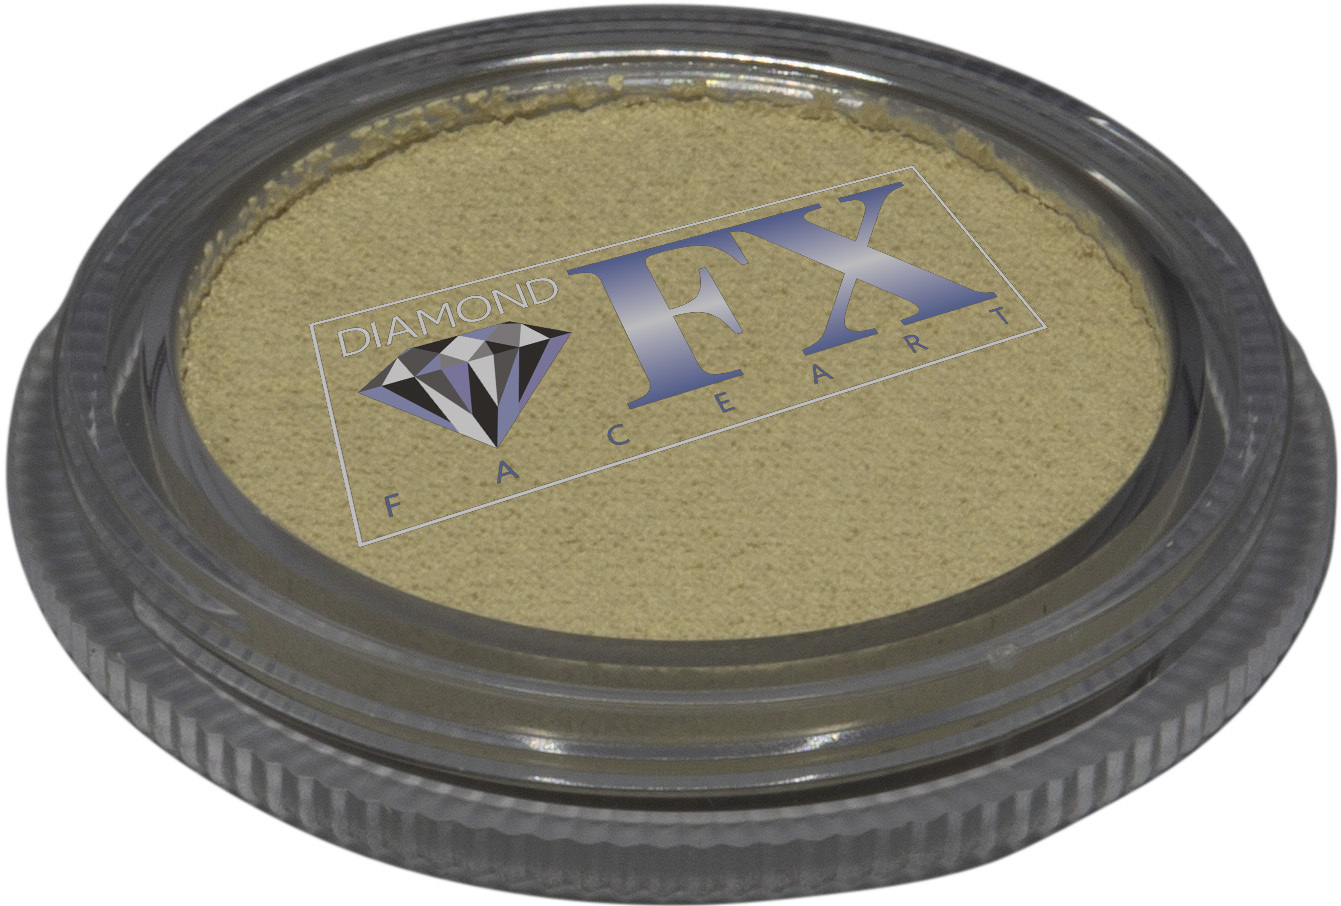 Diamond FX Sahara Gold Metallic 30g - Small Image